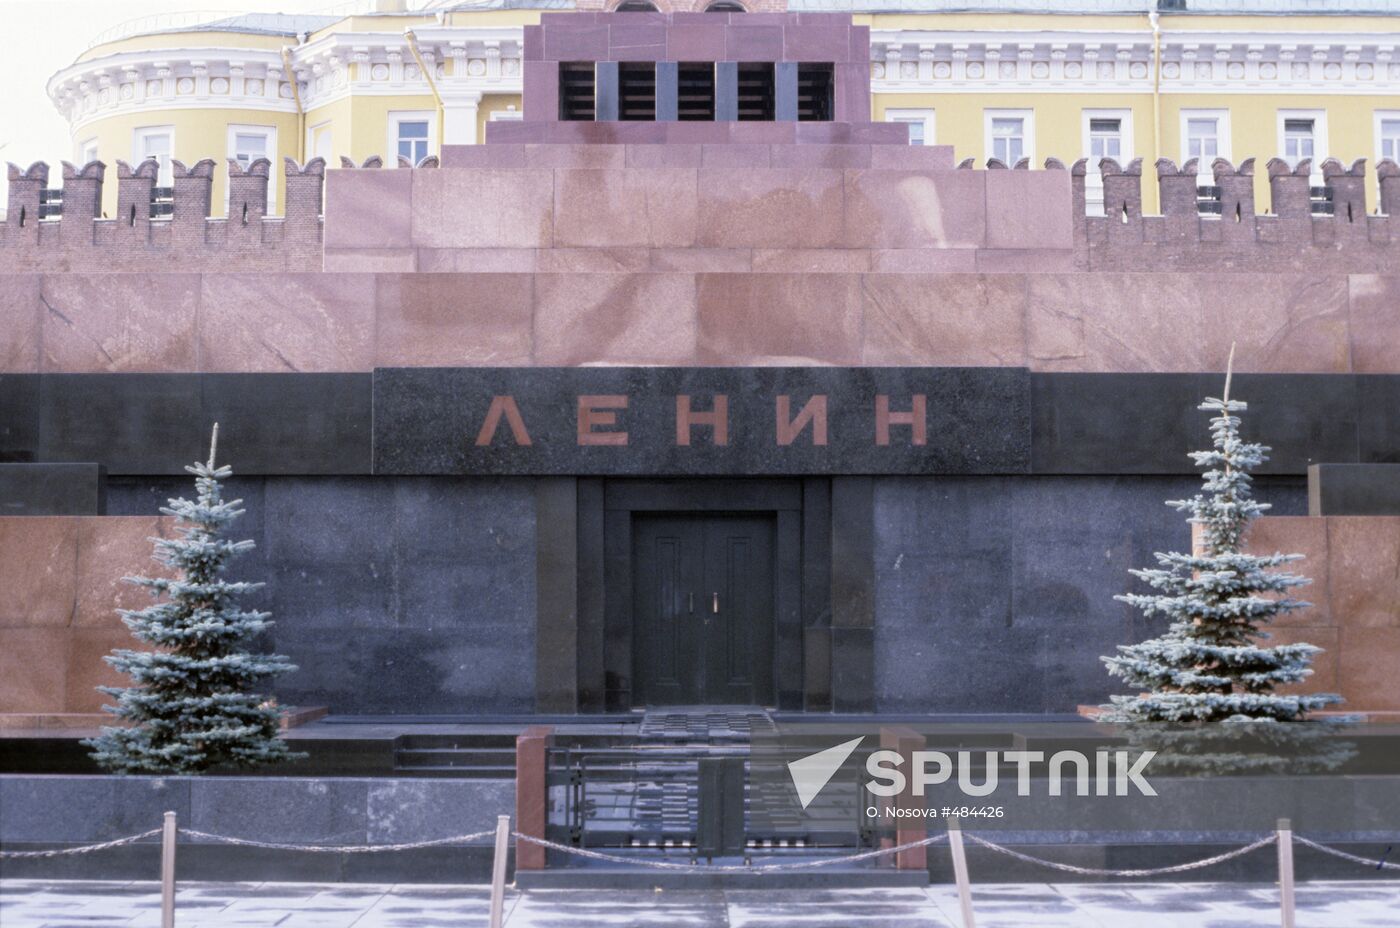 Vladimir Lenin's Mausoleum